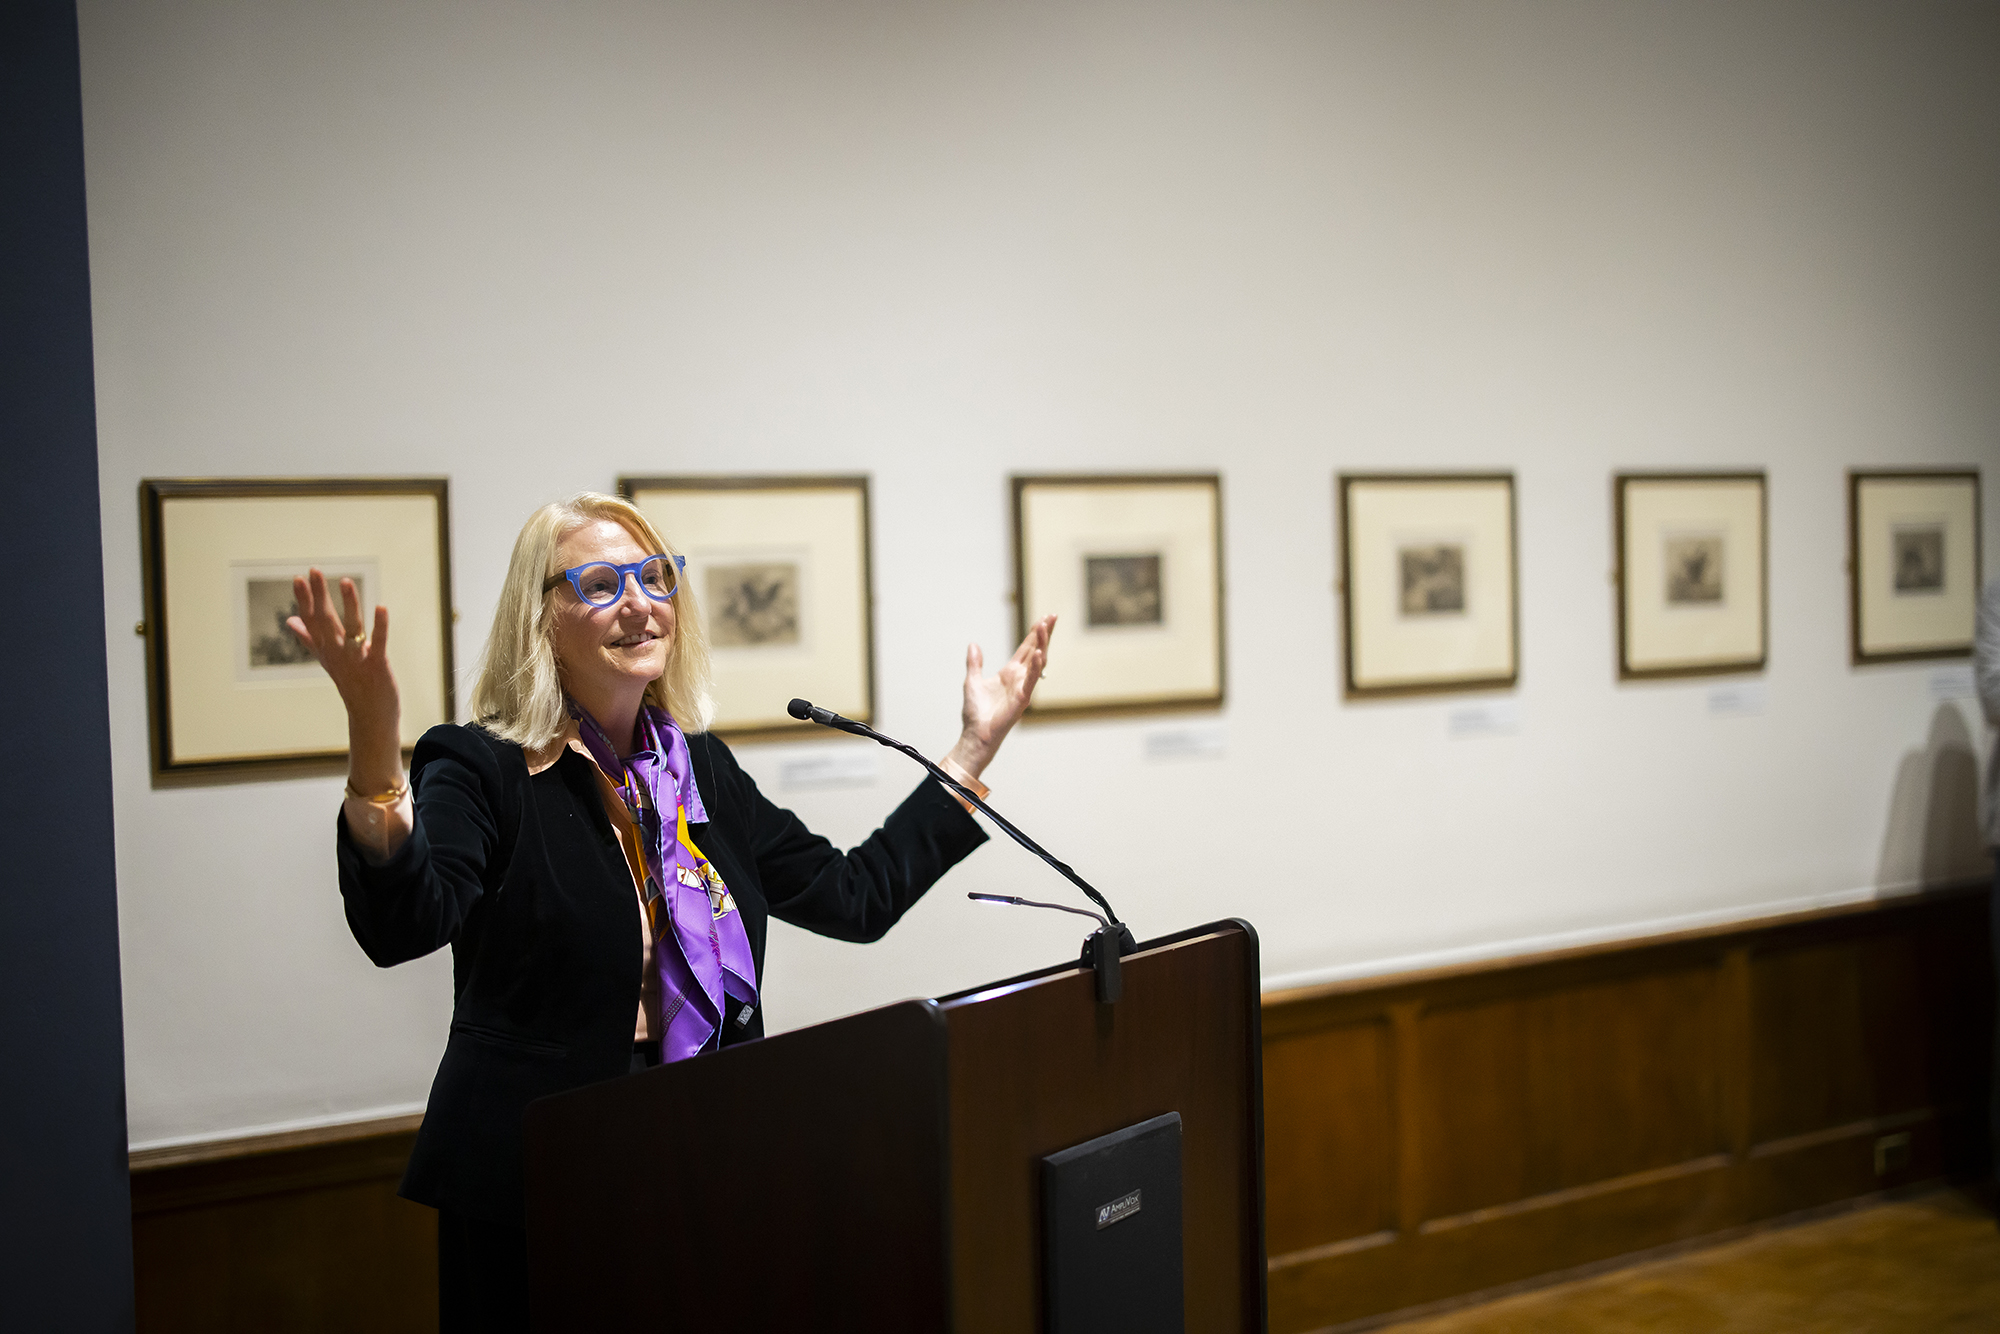 Lynn Marsden-Atlass speaking at podium with arms gesturing upwards